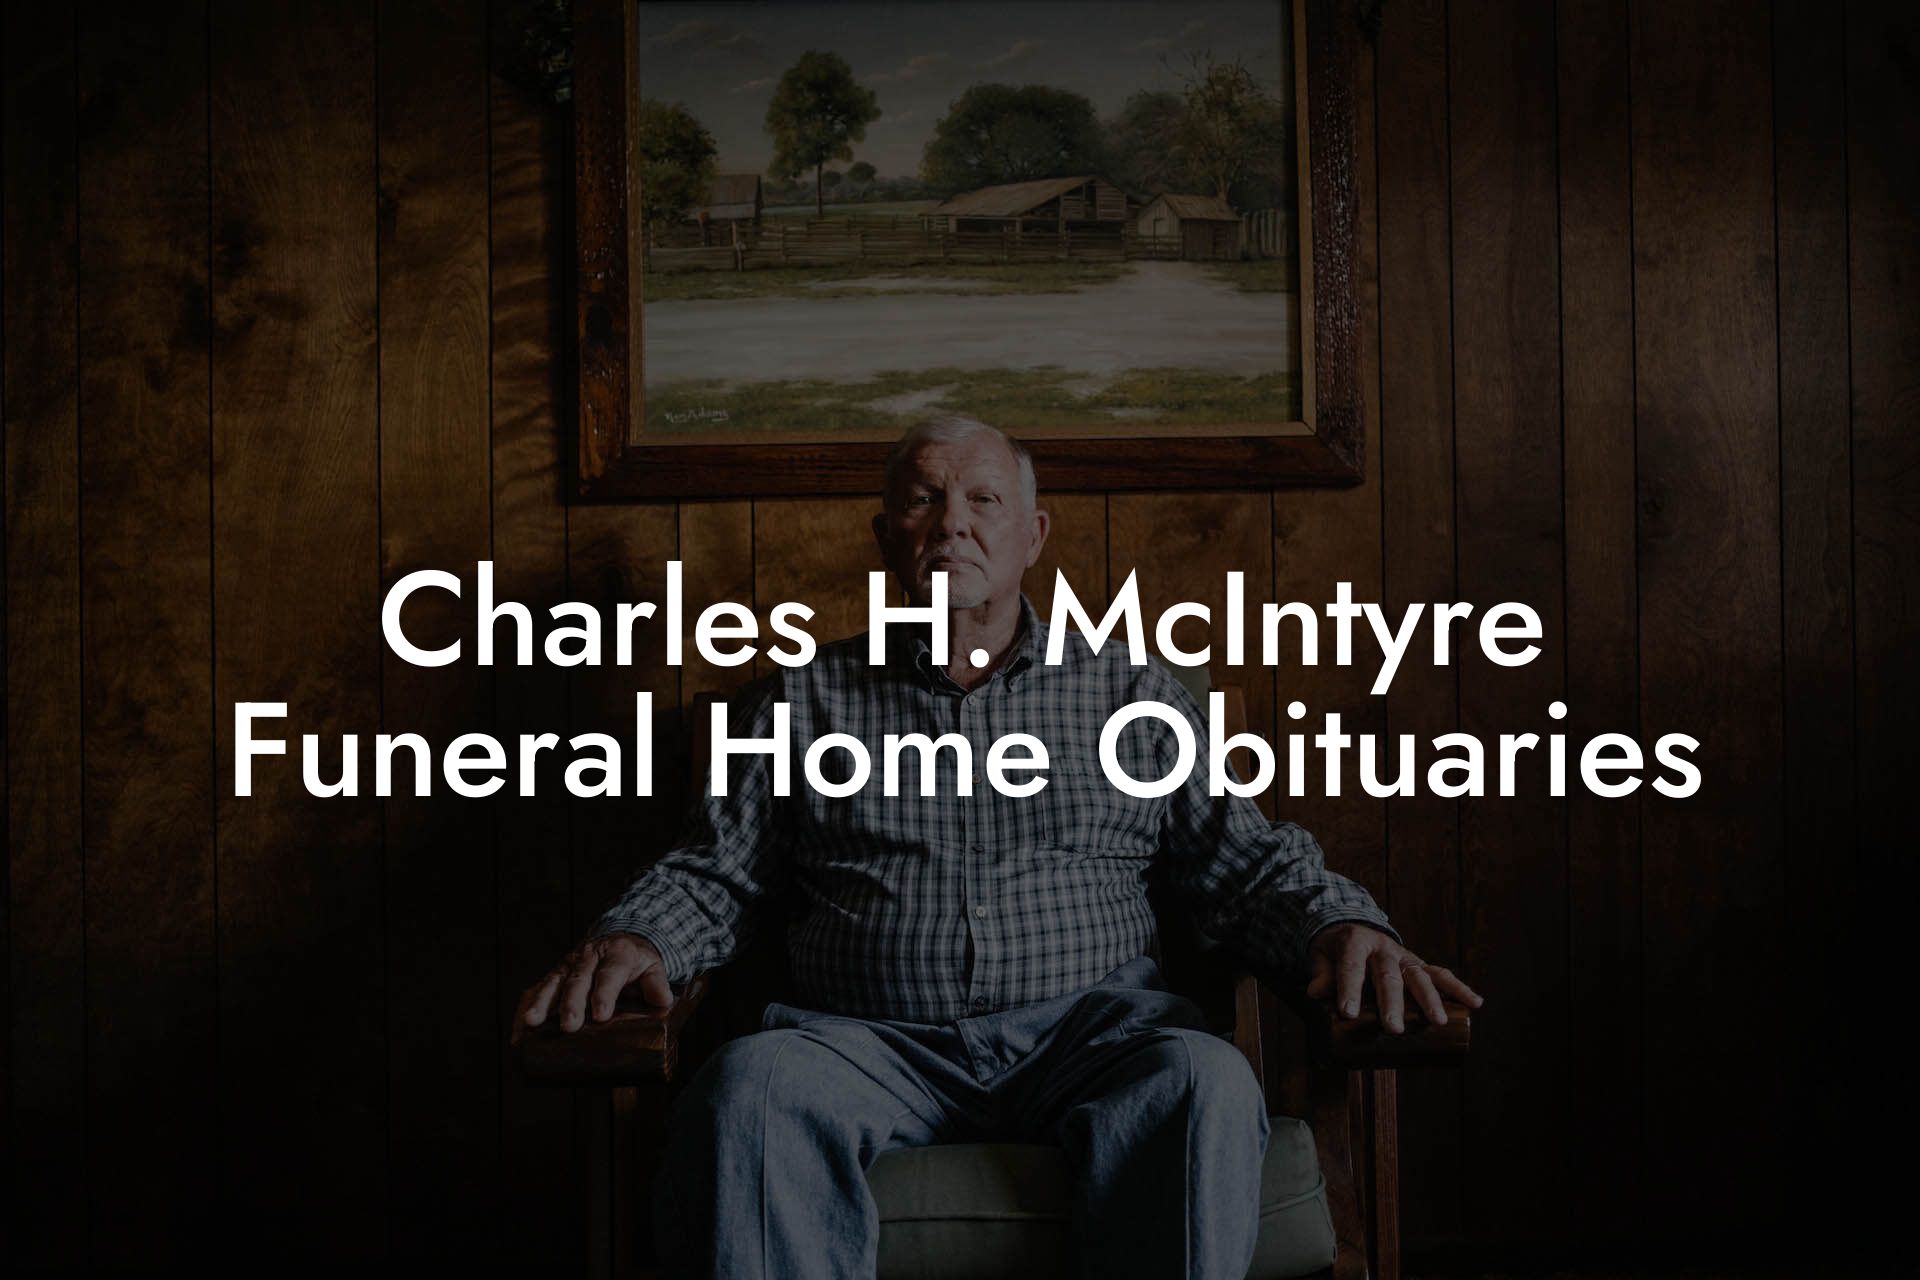 Charles H. McIntyre Funeral Home Obituaries